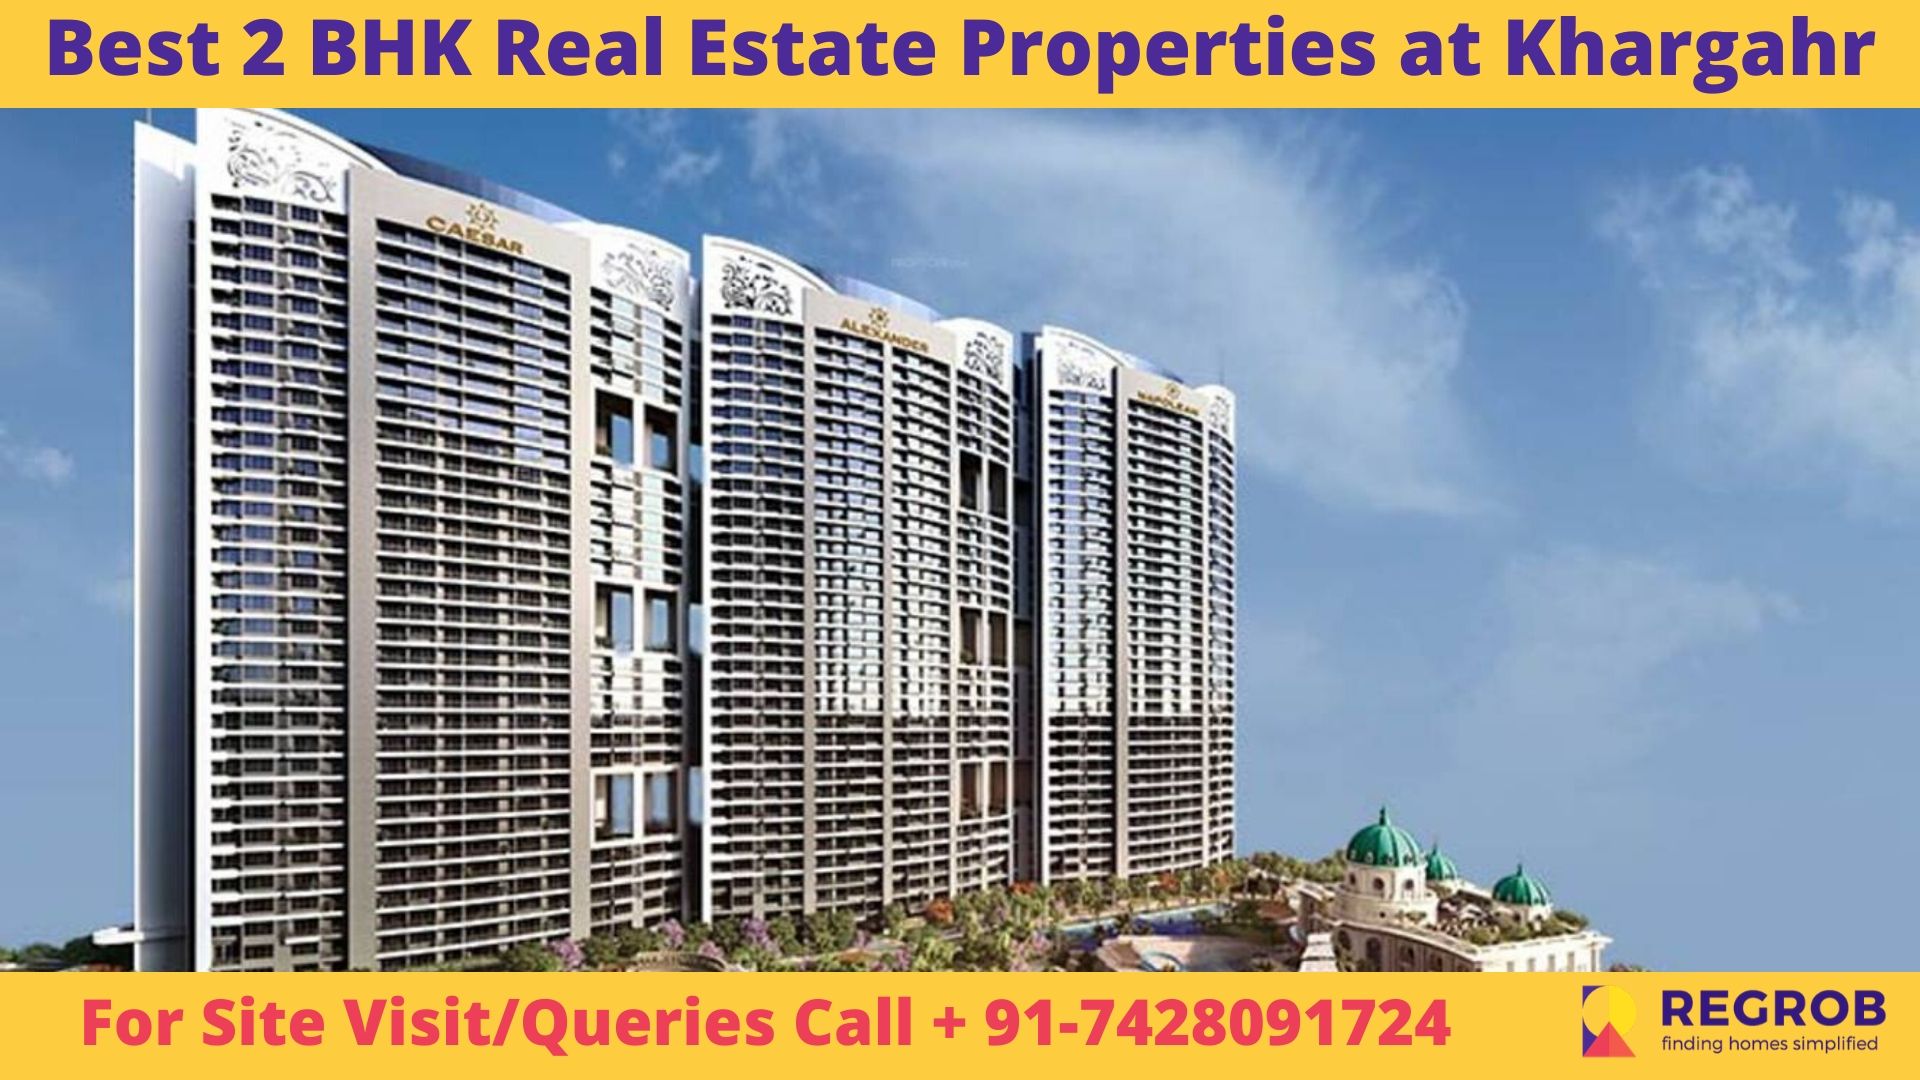 Best 2 BHK Real Estate Properties at Khargahr, Navi Mumbai